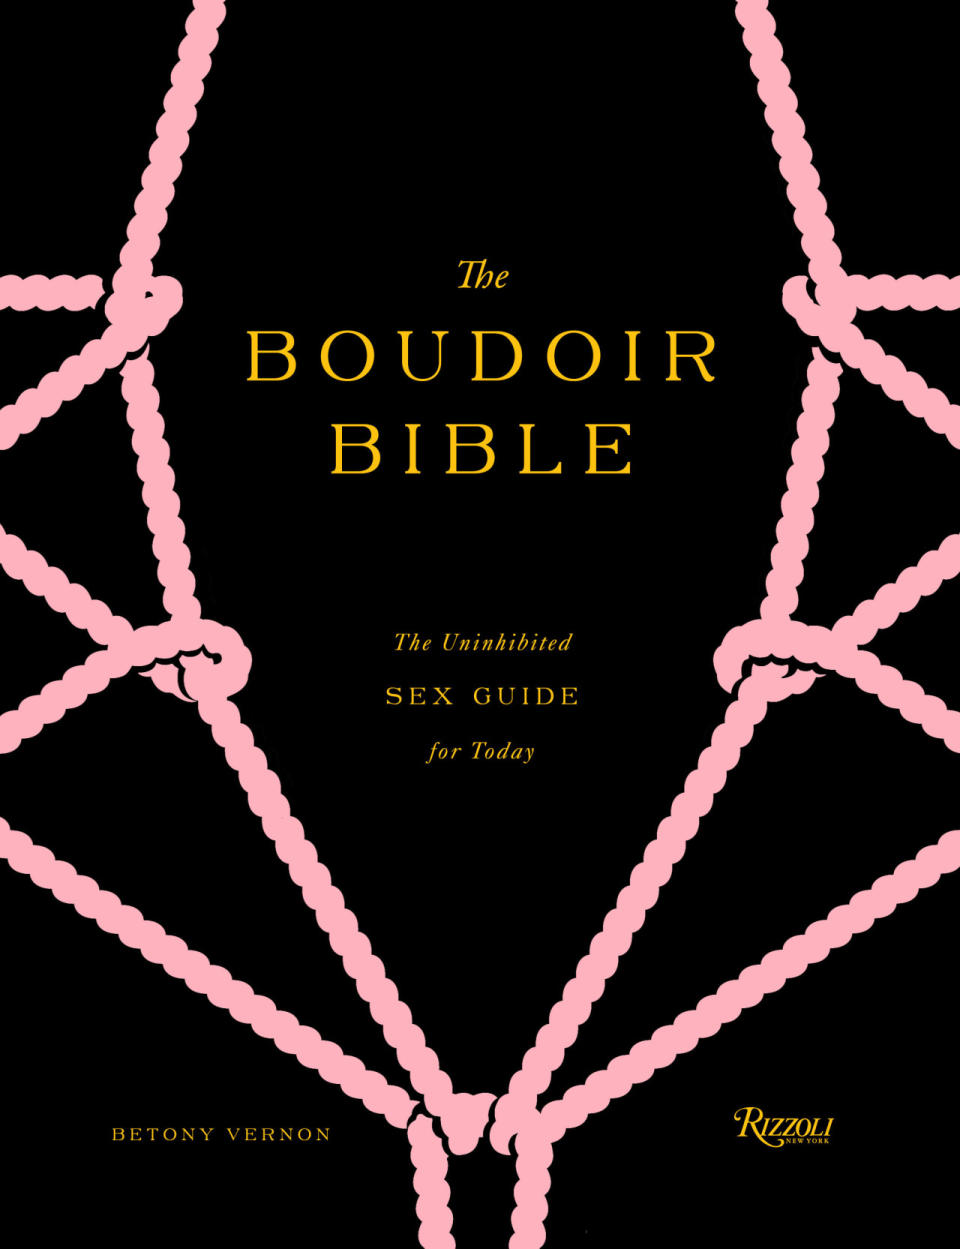 1. The Boudoir Bible by Betany Venon